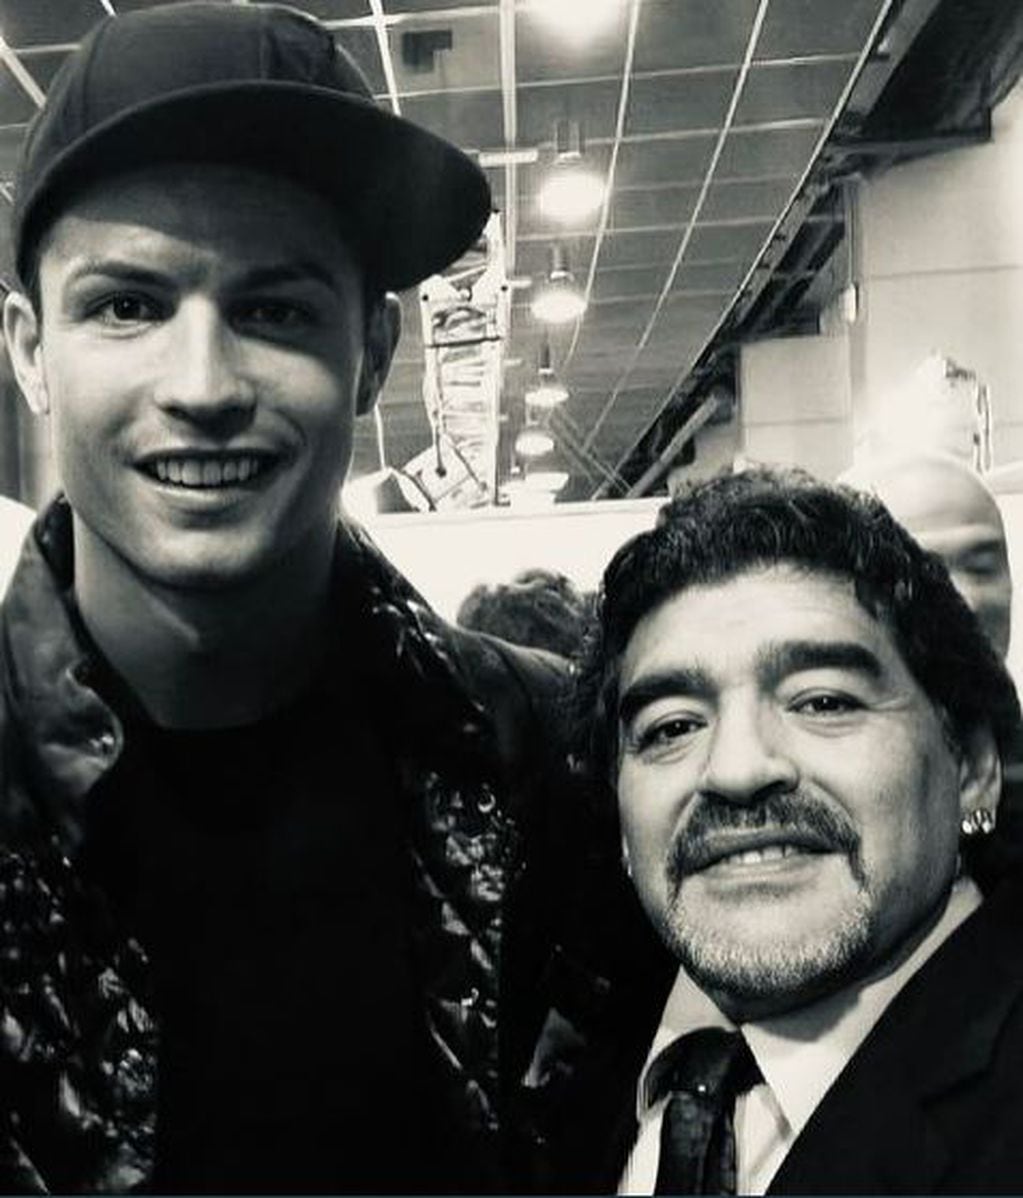 La despedida de Cristiano Ronaldo para Diego Maradona